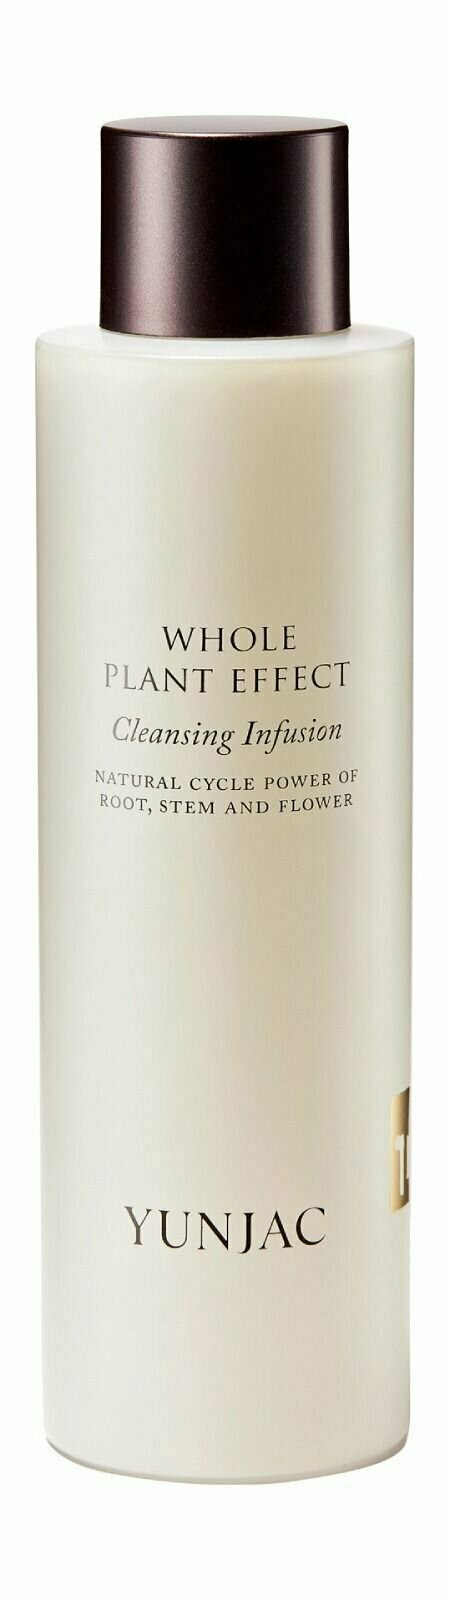 Мягкая очищающая вода для сухой кожи лица Yunjac Whole Plant Effect Cleansing Infusion